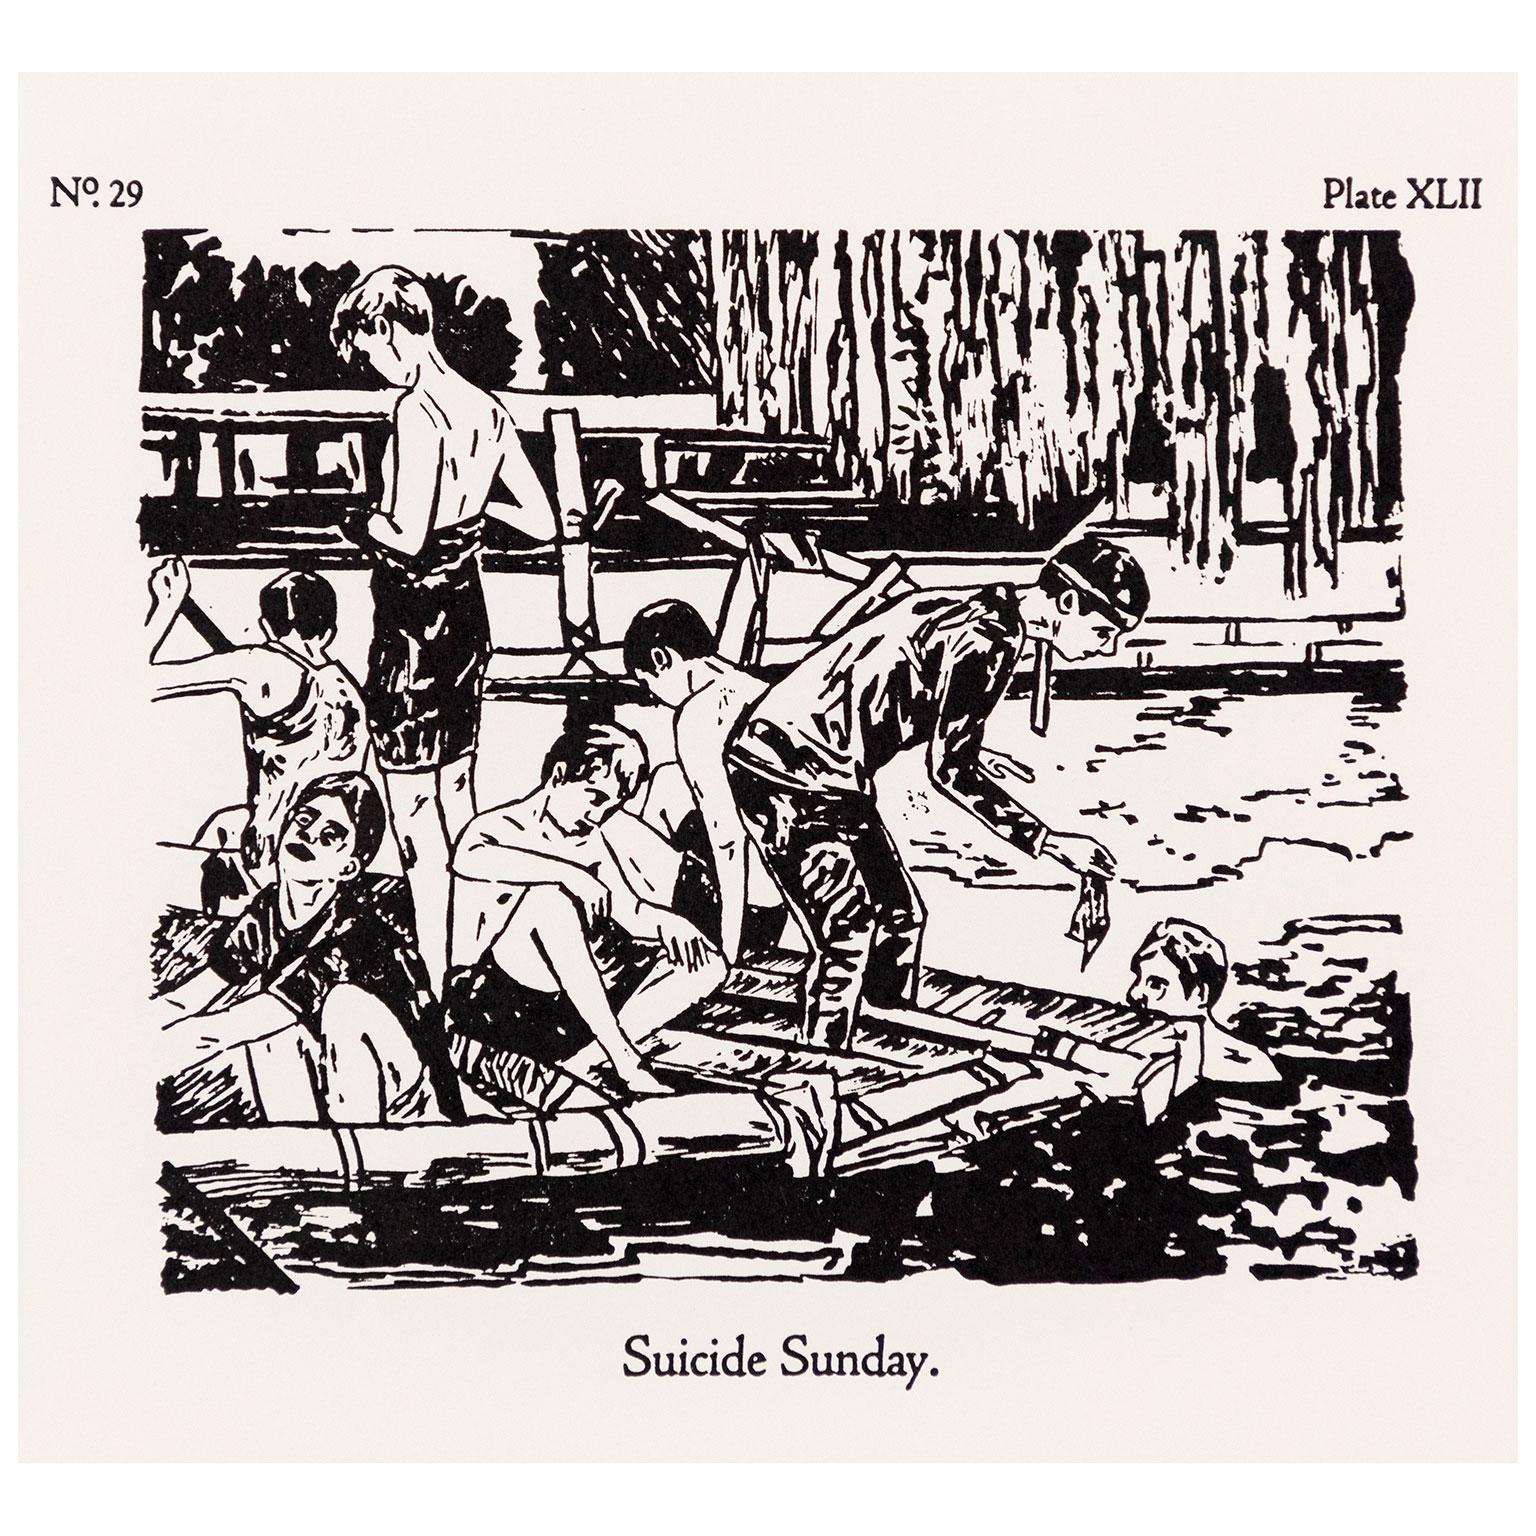 Suicide Sunday no. 29, Plate XLII - Print by Hernan Bas